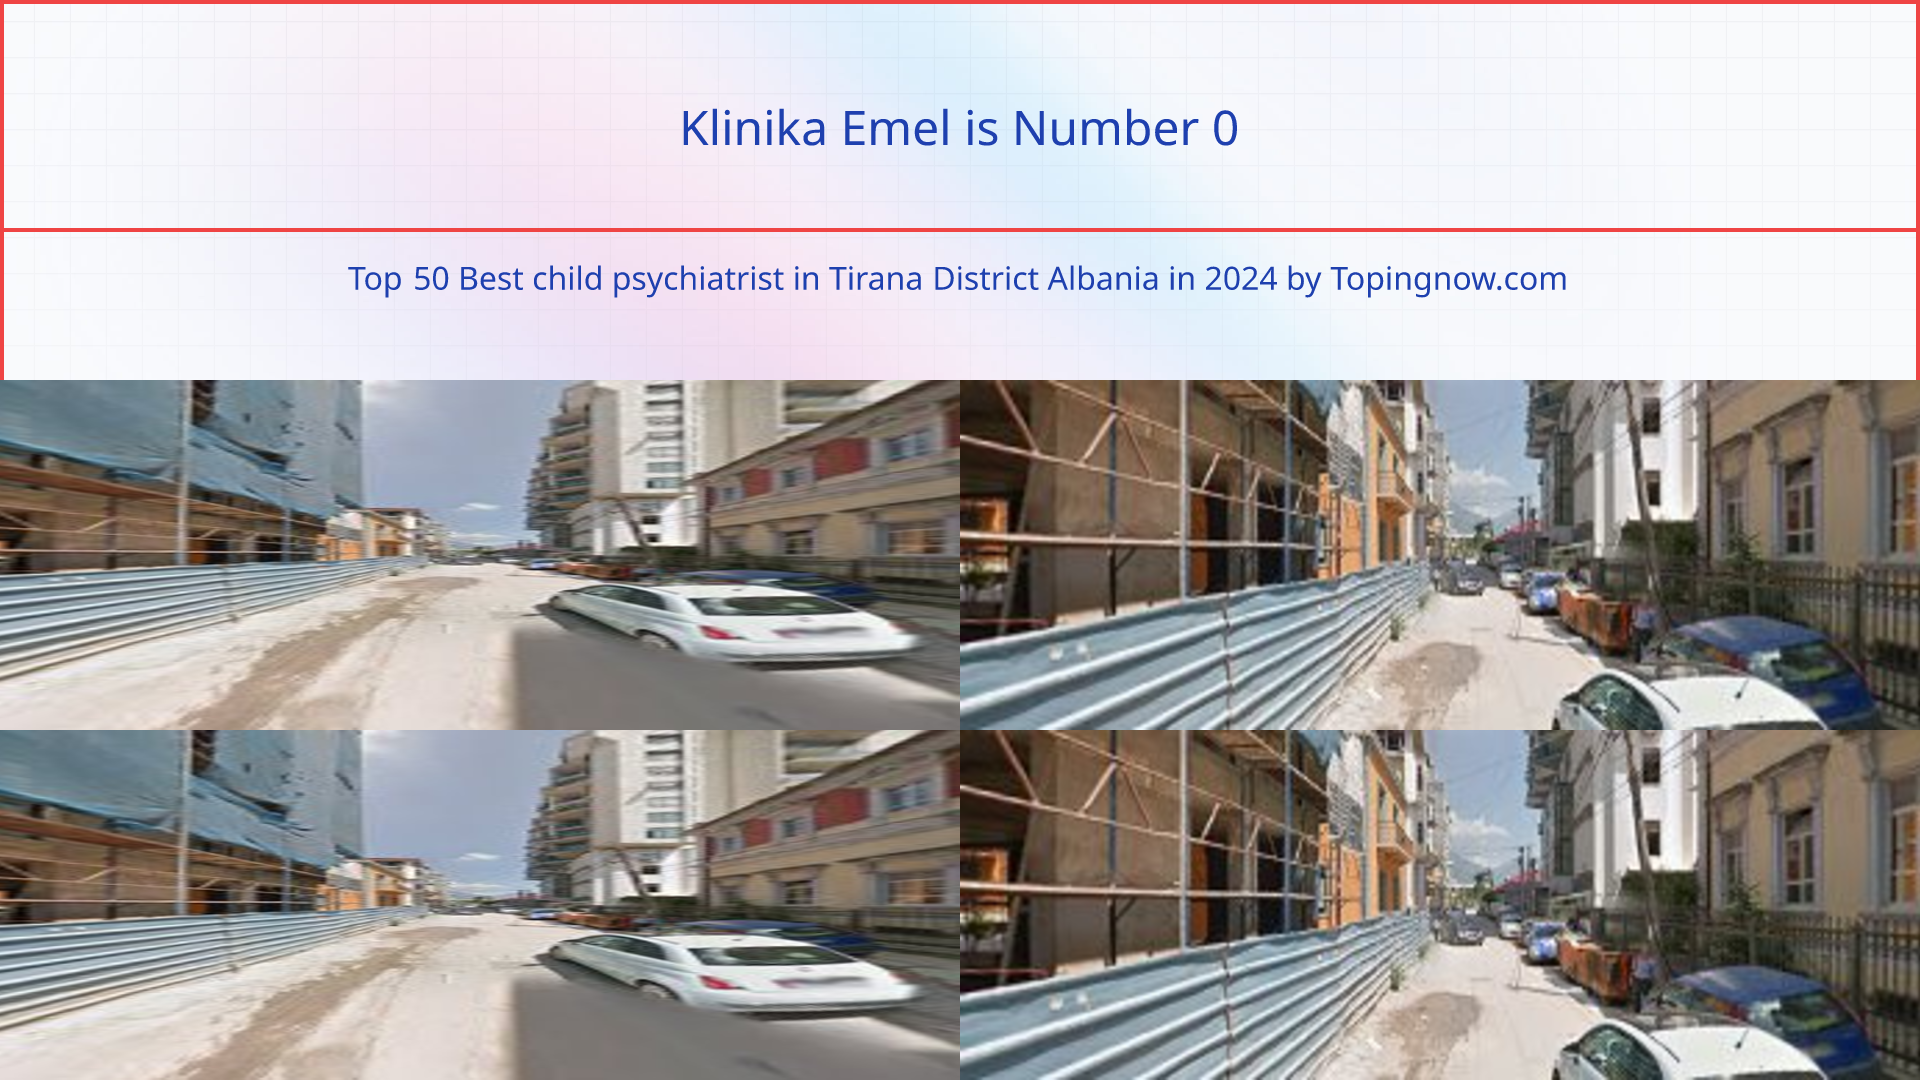 Klinika Emel: Top 50 Best child psychiatrist in Tirana District Albania in 2024